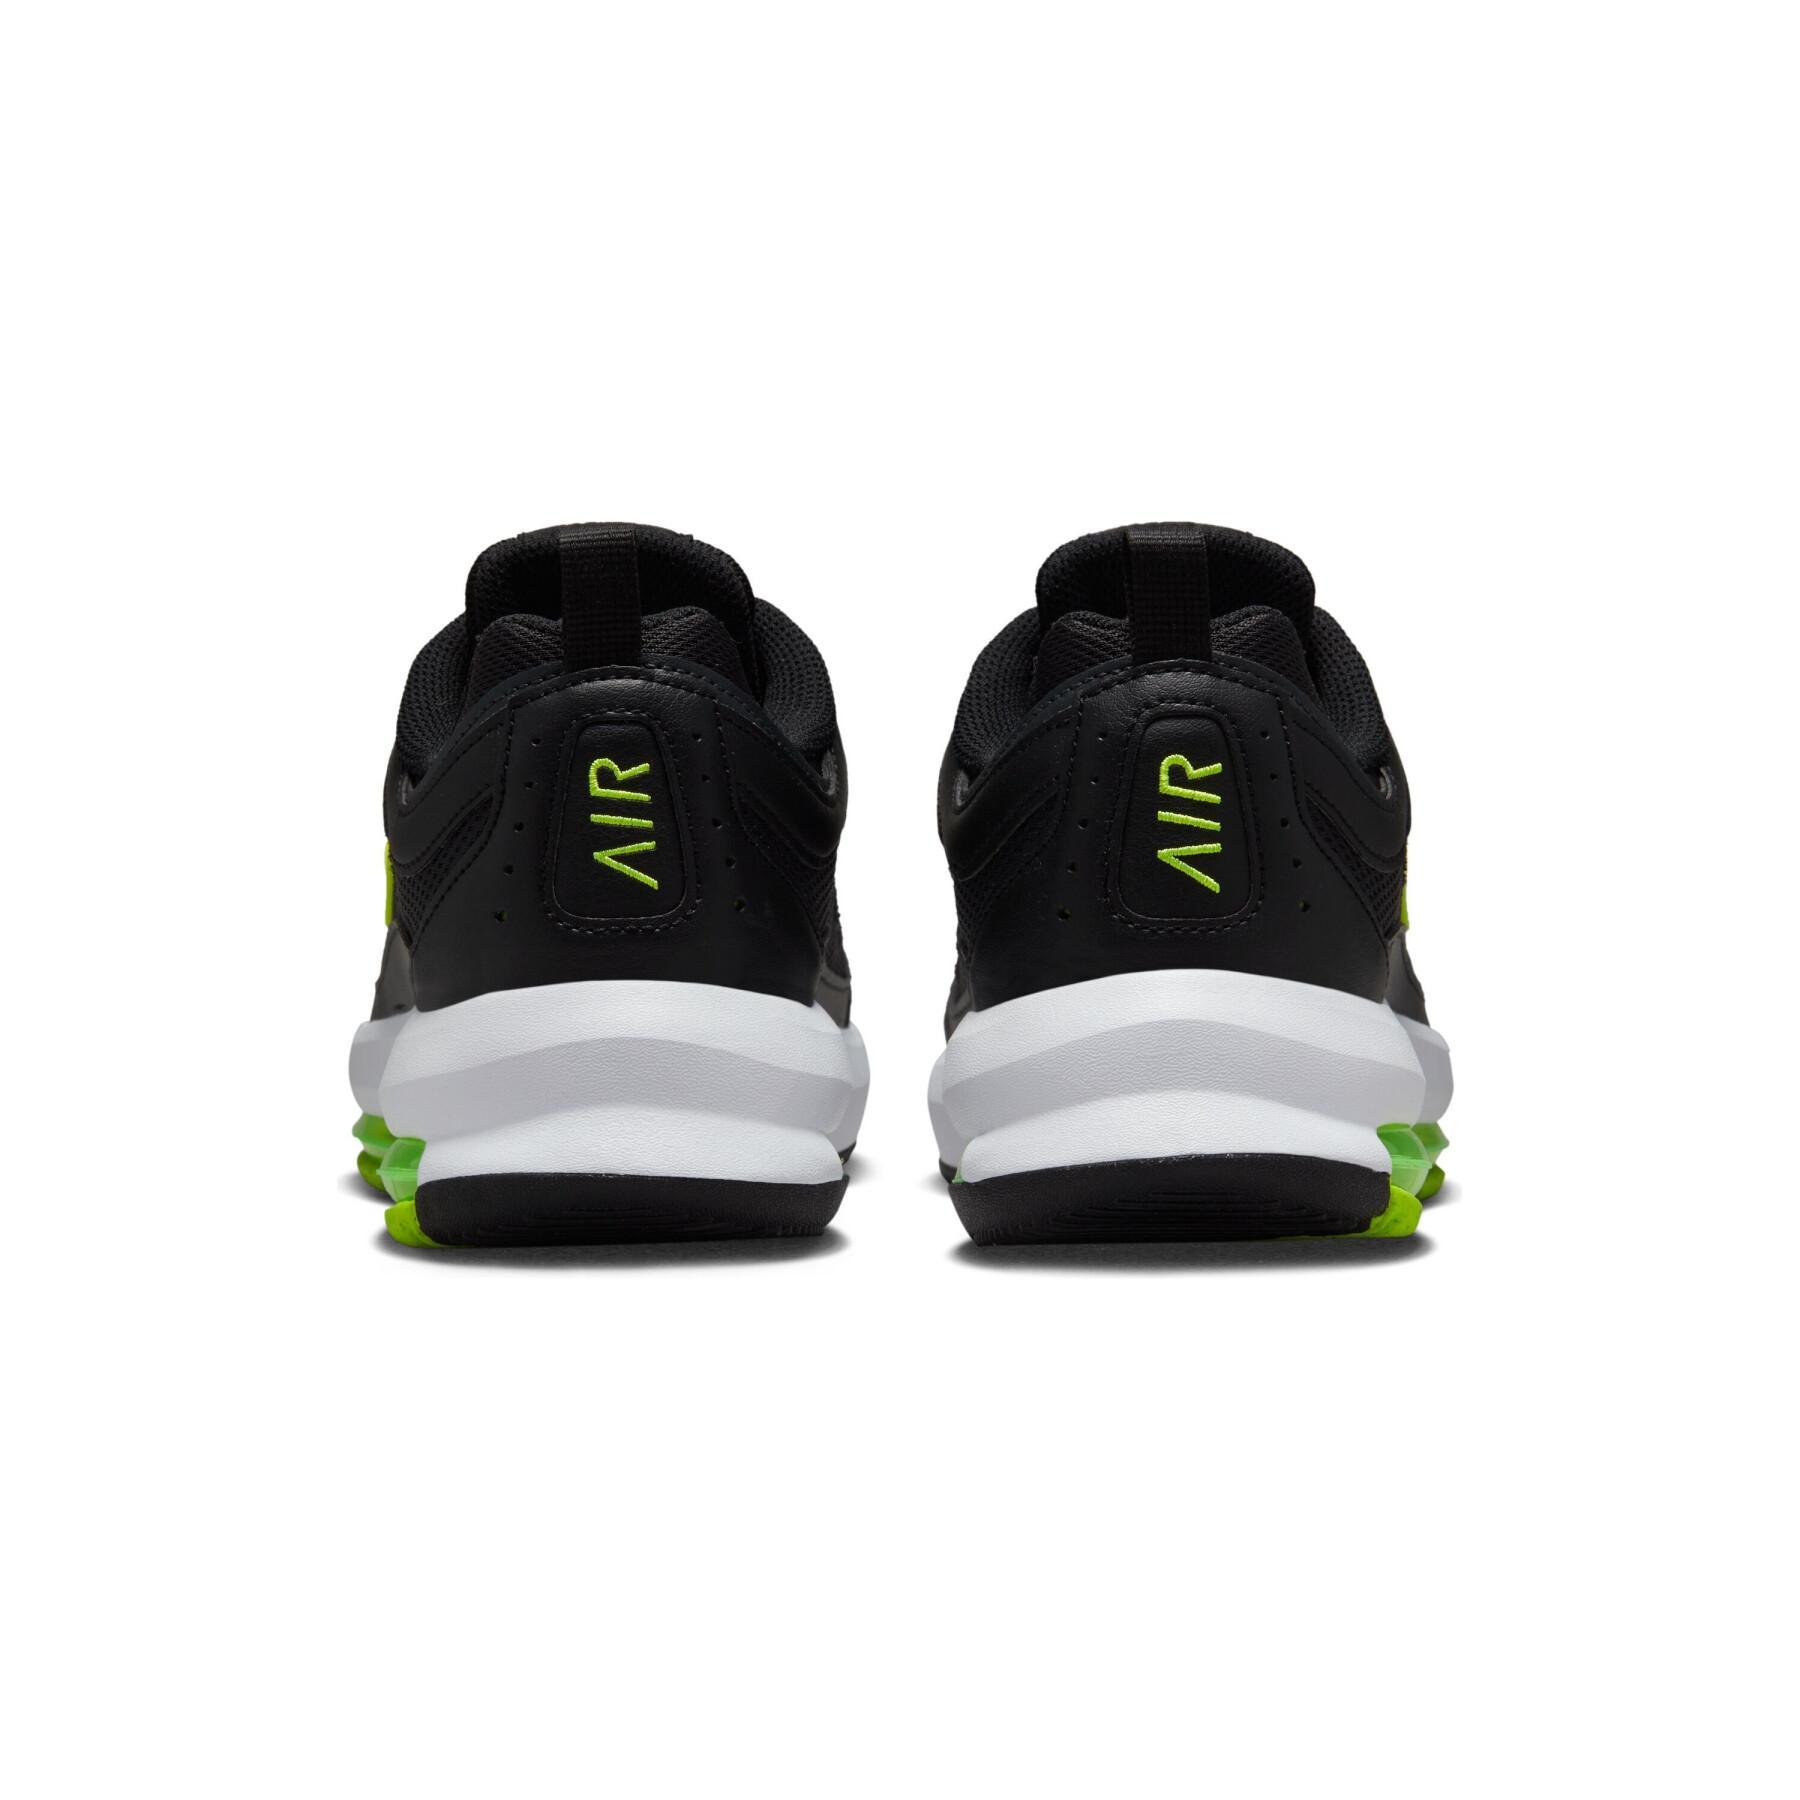 Zapatillas Nike Air Max AP